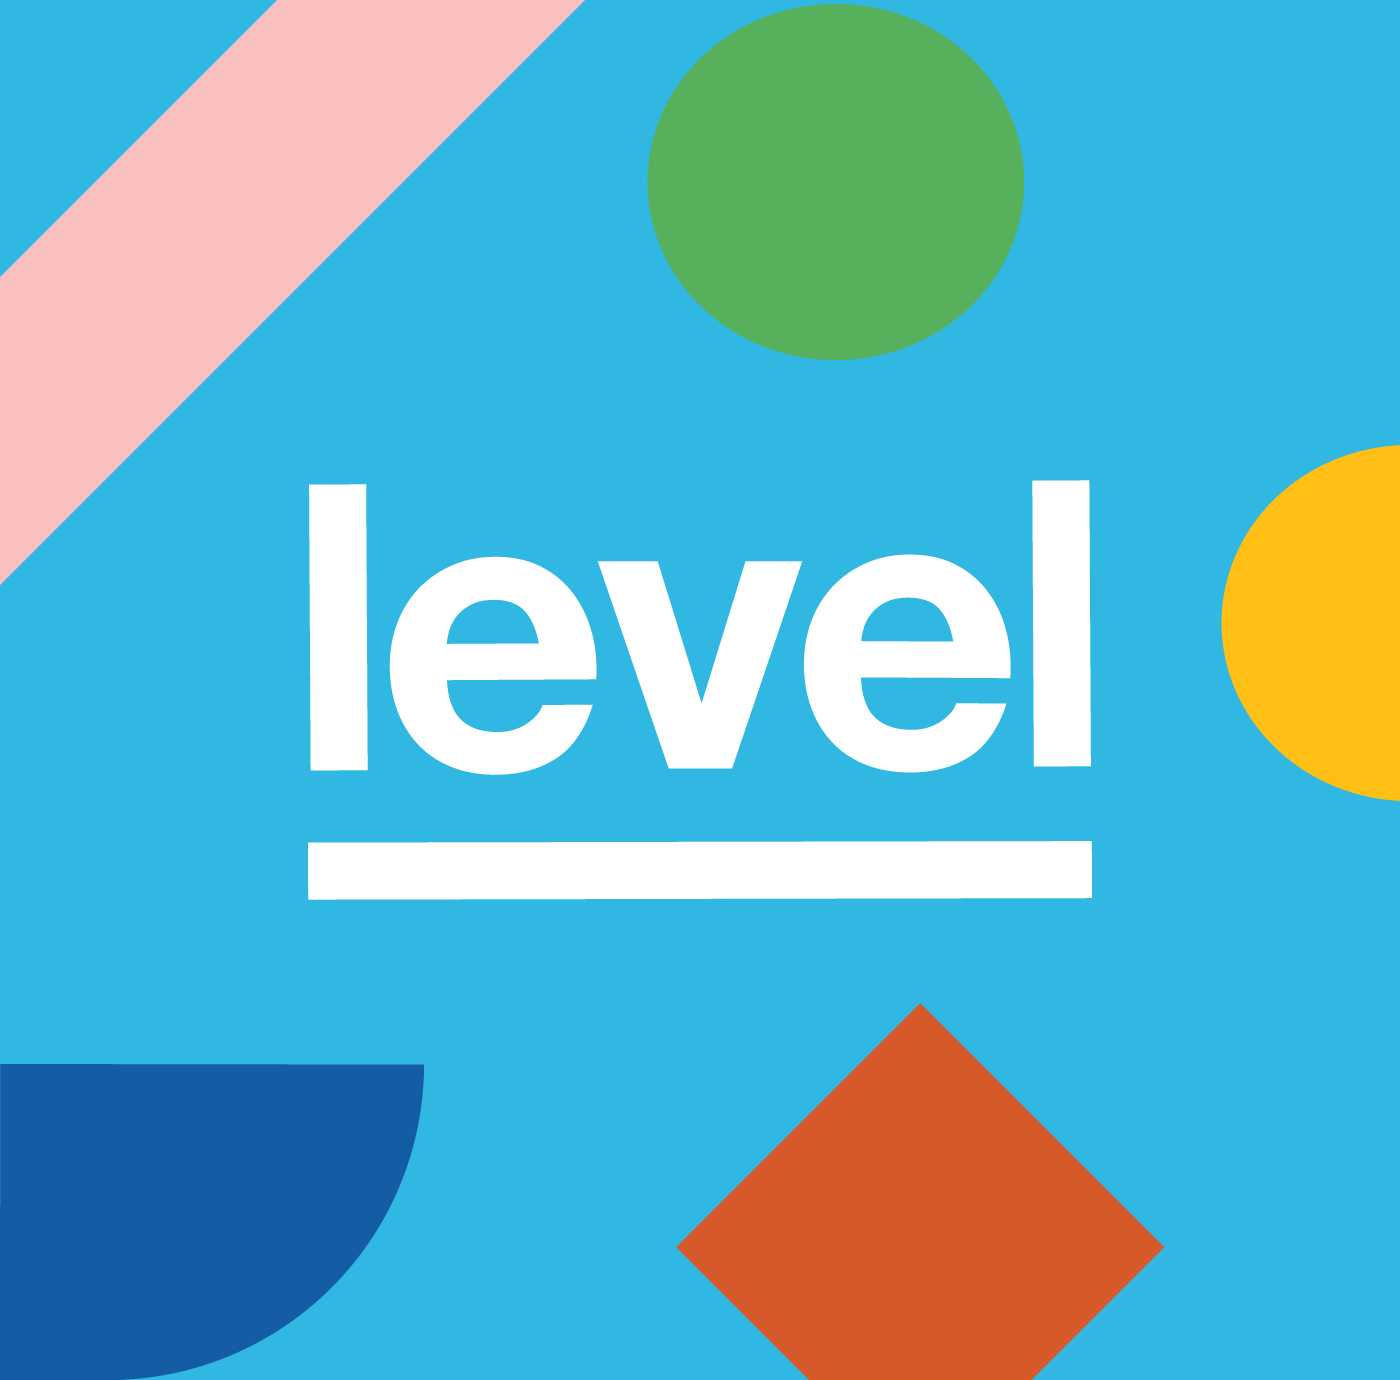 Level program logo against blue background